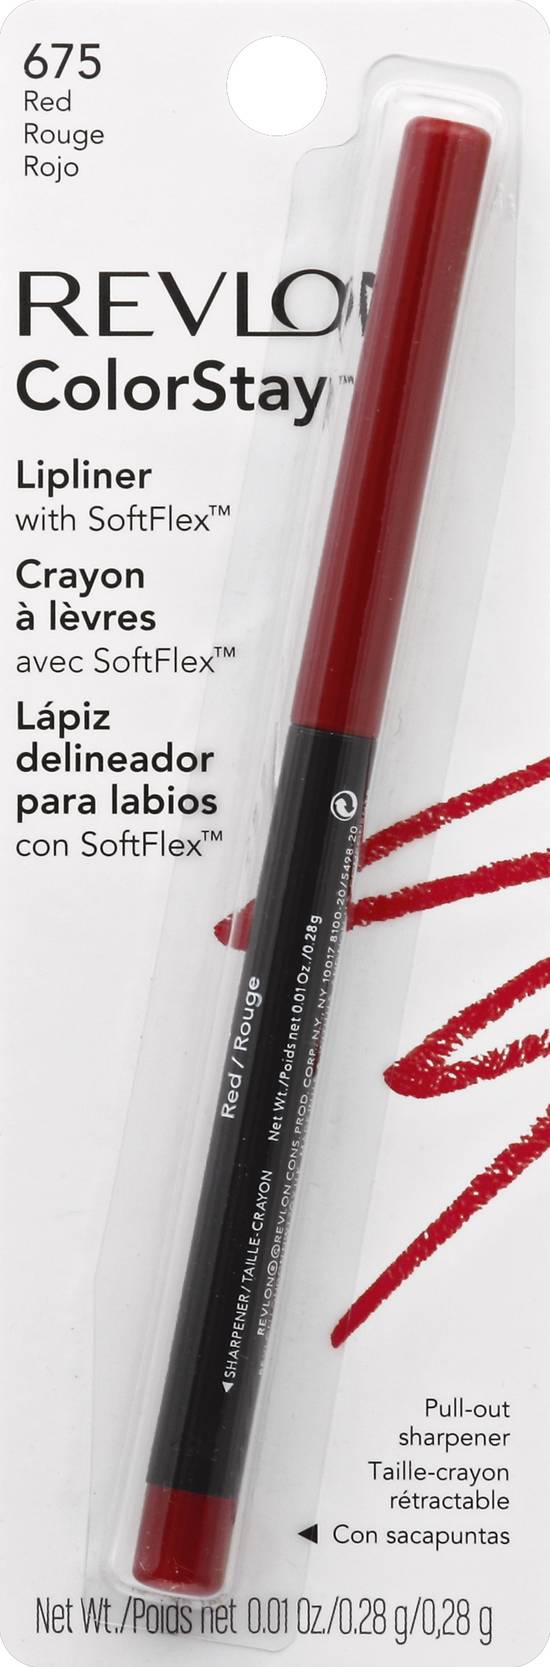 Revlon Colorstay Red 675 Lip Liner